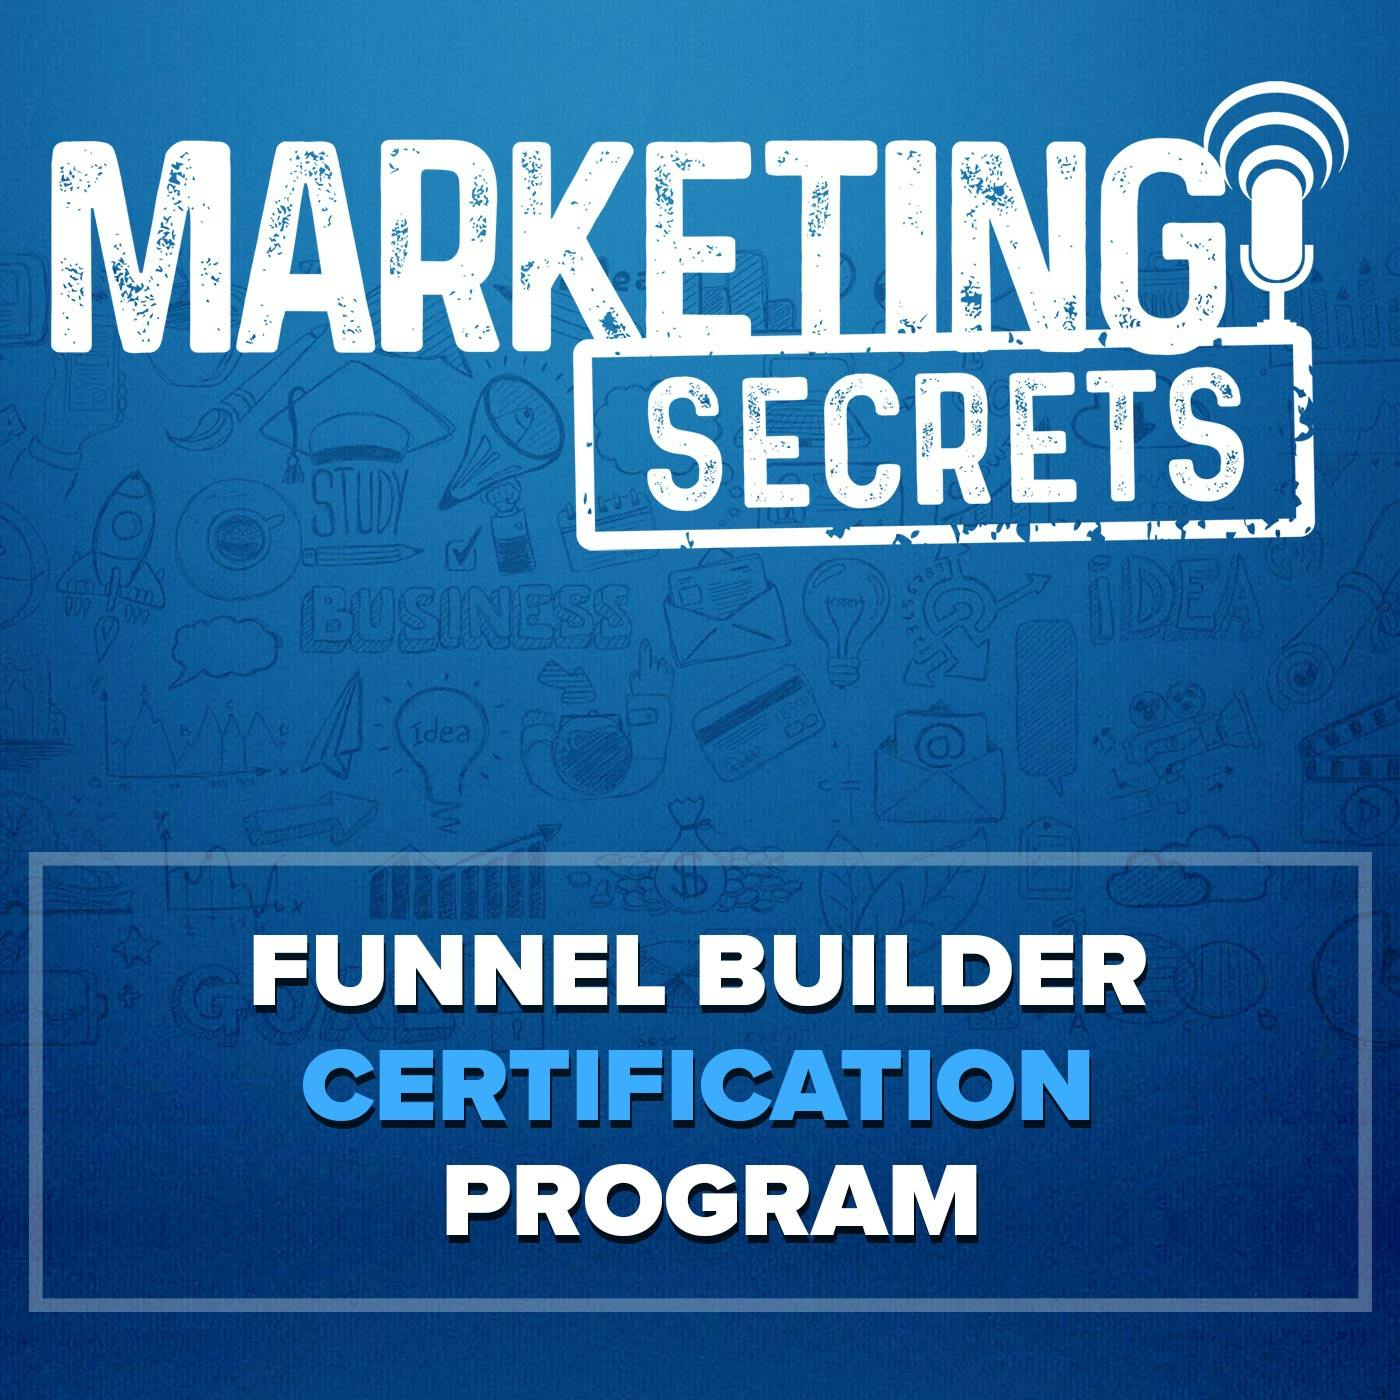 Funnel Builder Certification Program